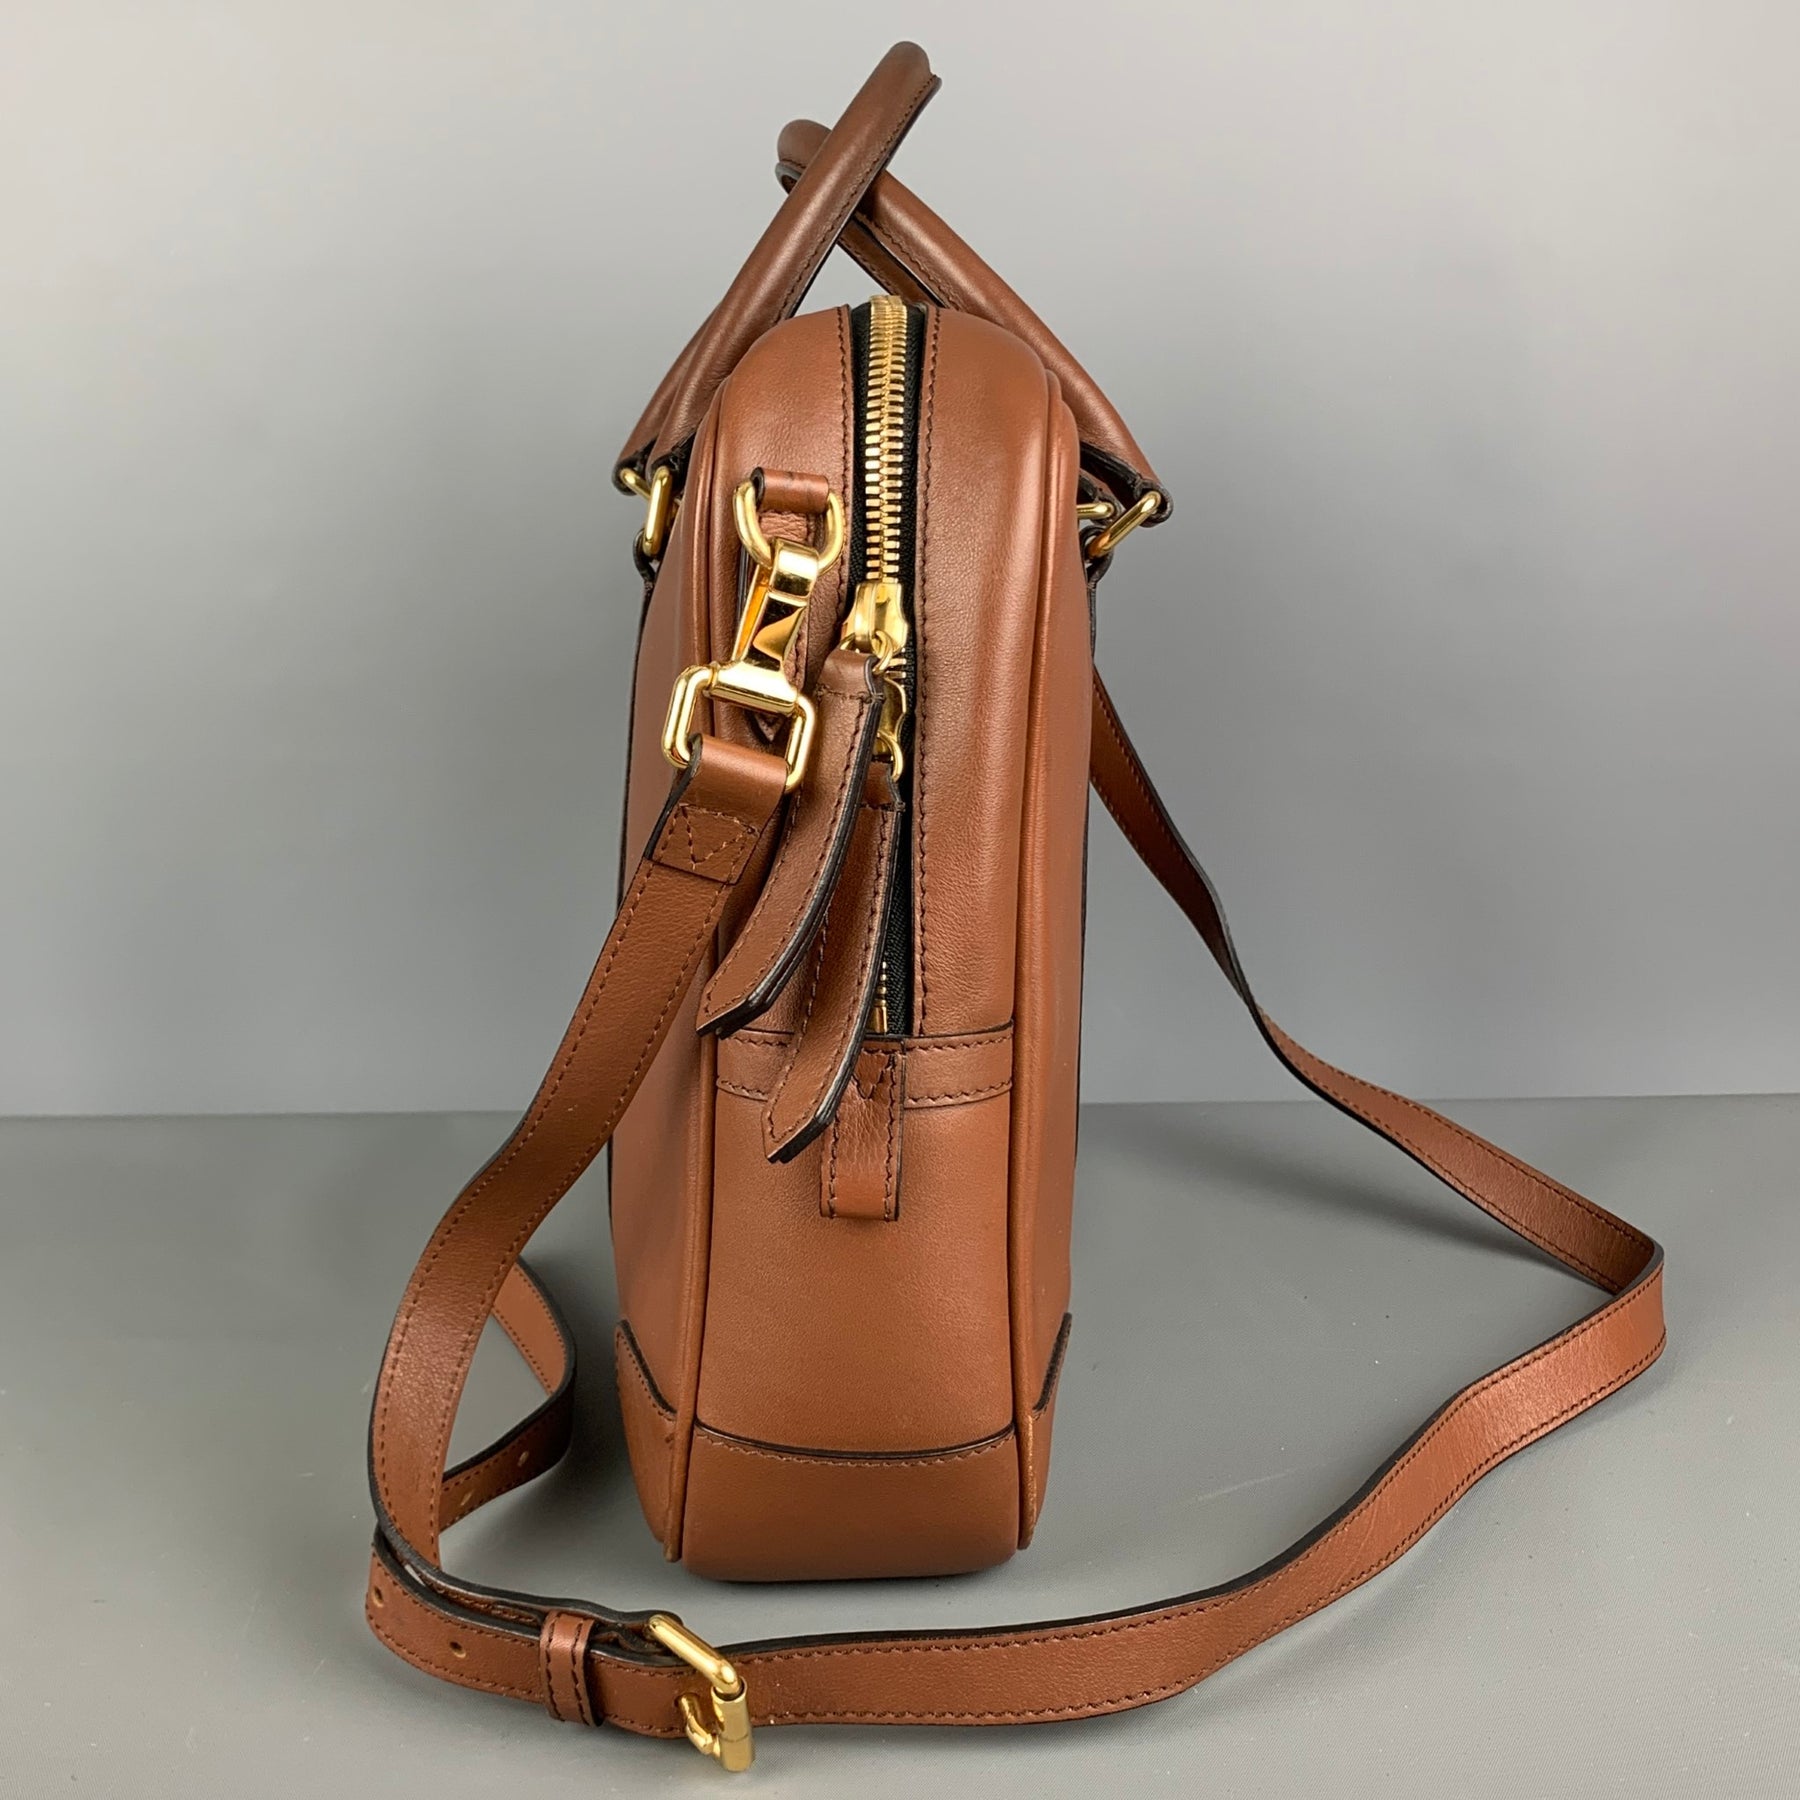 Burberry grainy leather briefcase - ORANGE  Designer laptop bag, Briefcase  for men, Leather briefcase